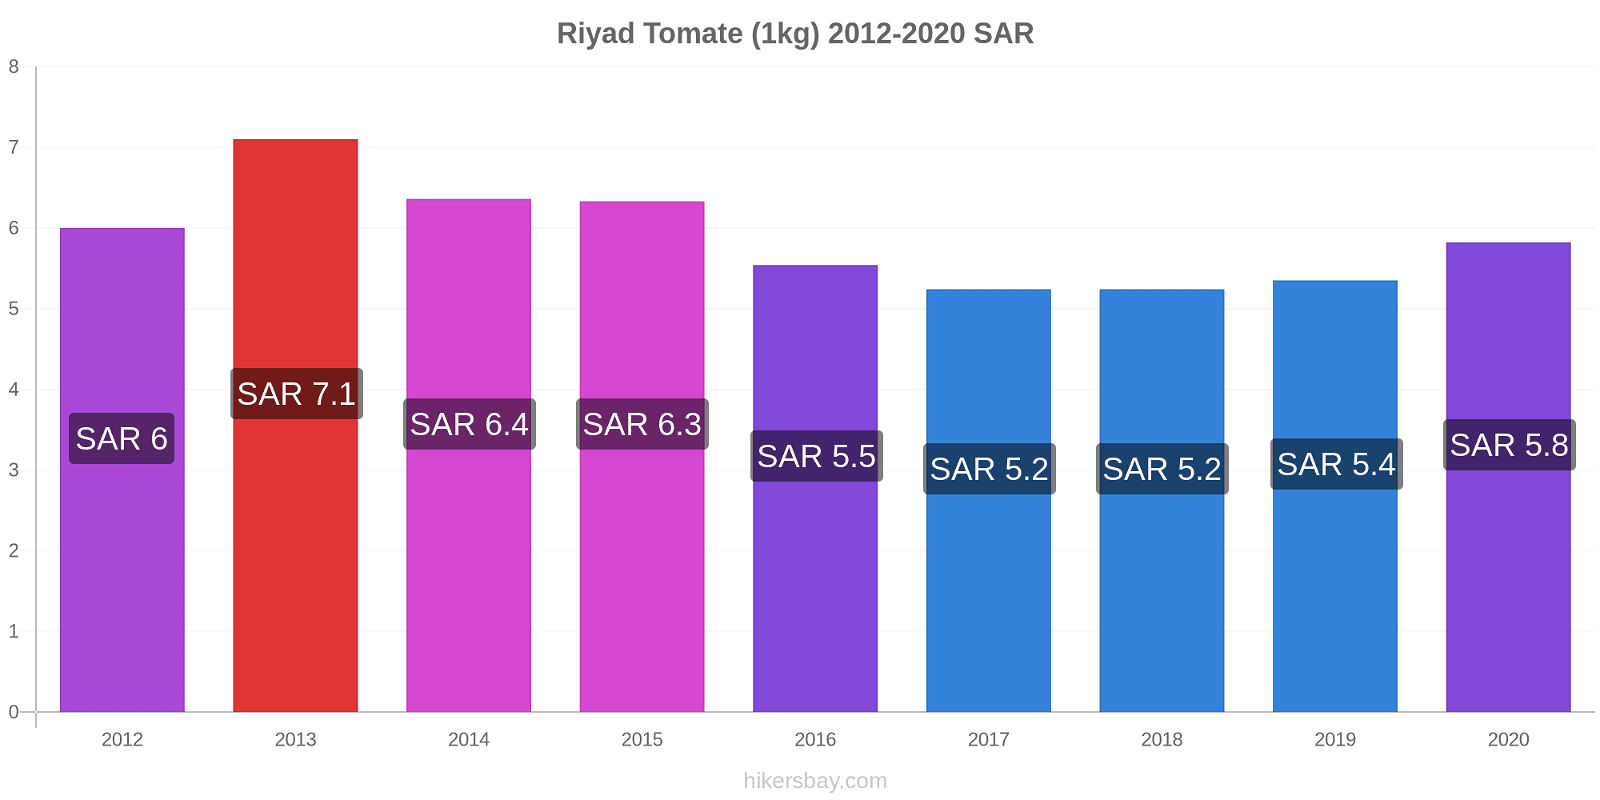 Riyad changements de prix Tomate (1kg) hikersbay.com